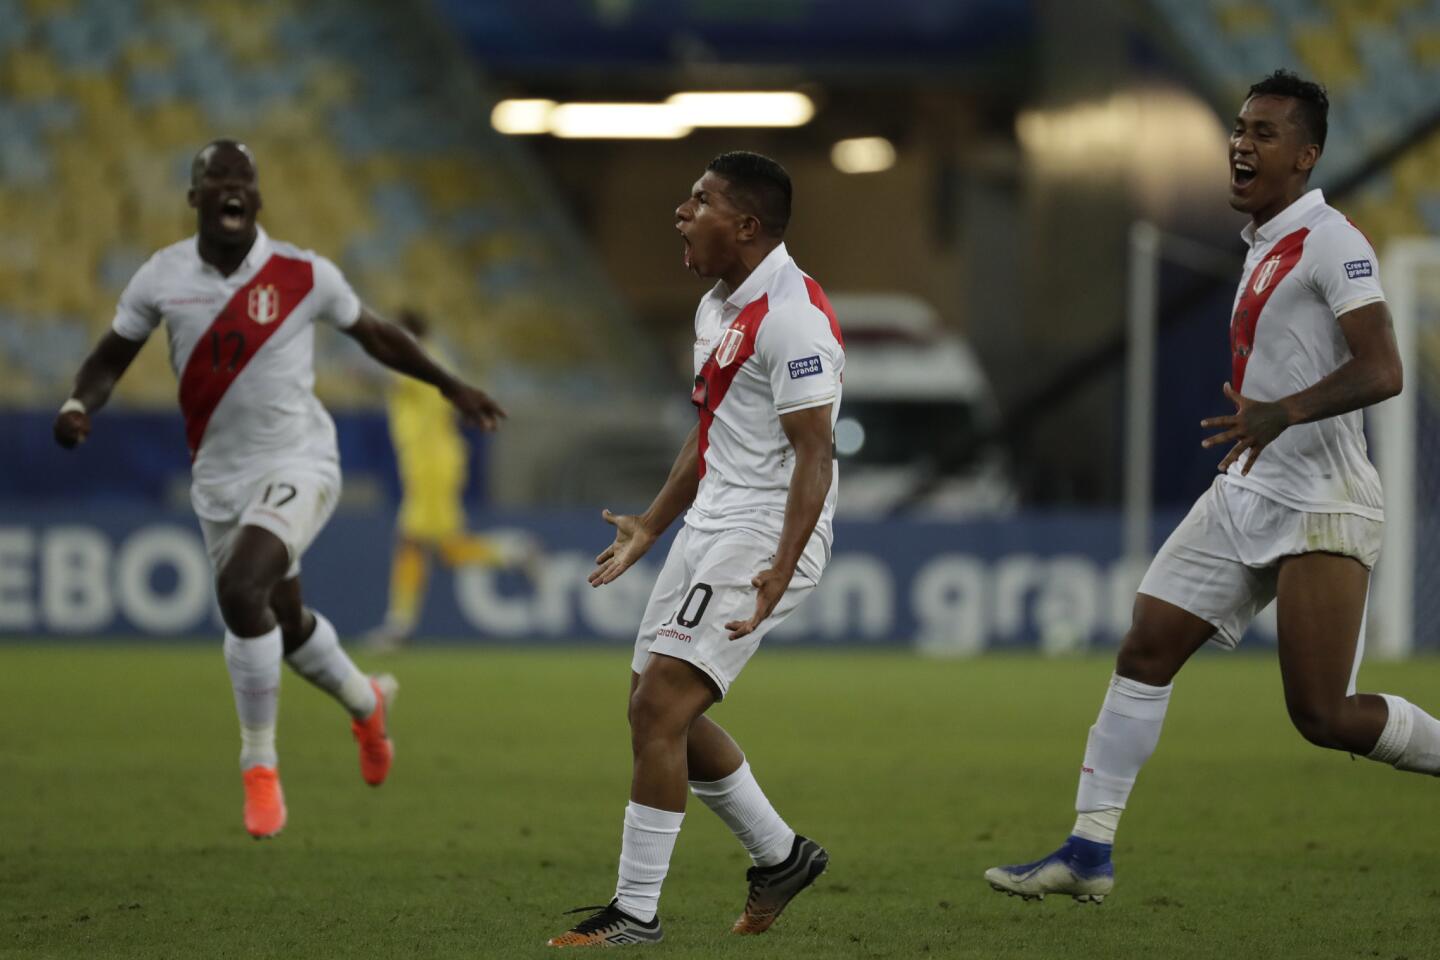 Peru's Edison Flores, center, celebrates scoring his side's 3rd goal against Bolivia during a Copa America Group A soccer match at the Maracana stadium in Rio de Janeiro, Brazil, Tuesday, June 18, 2019.